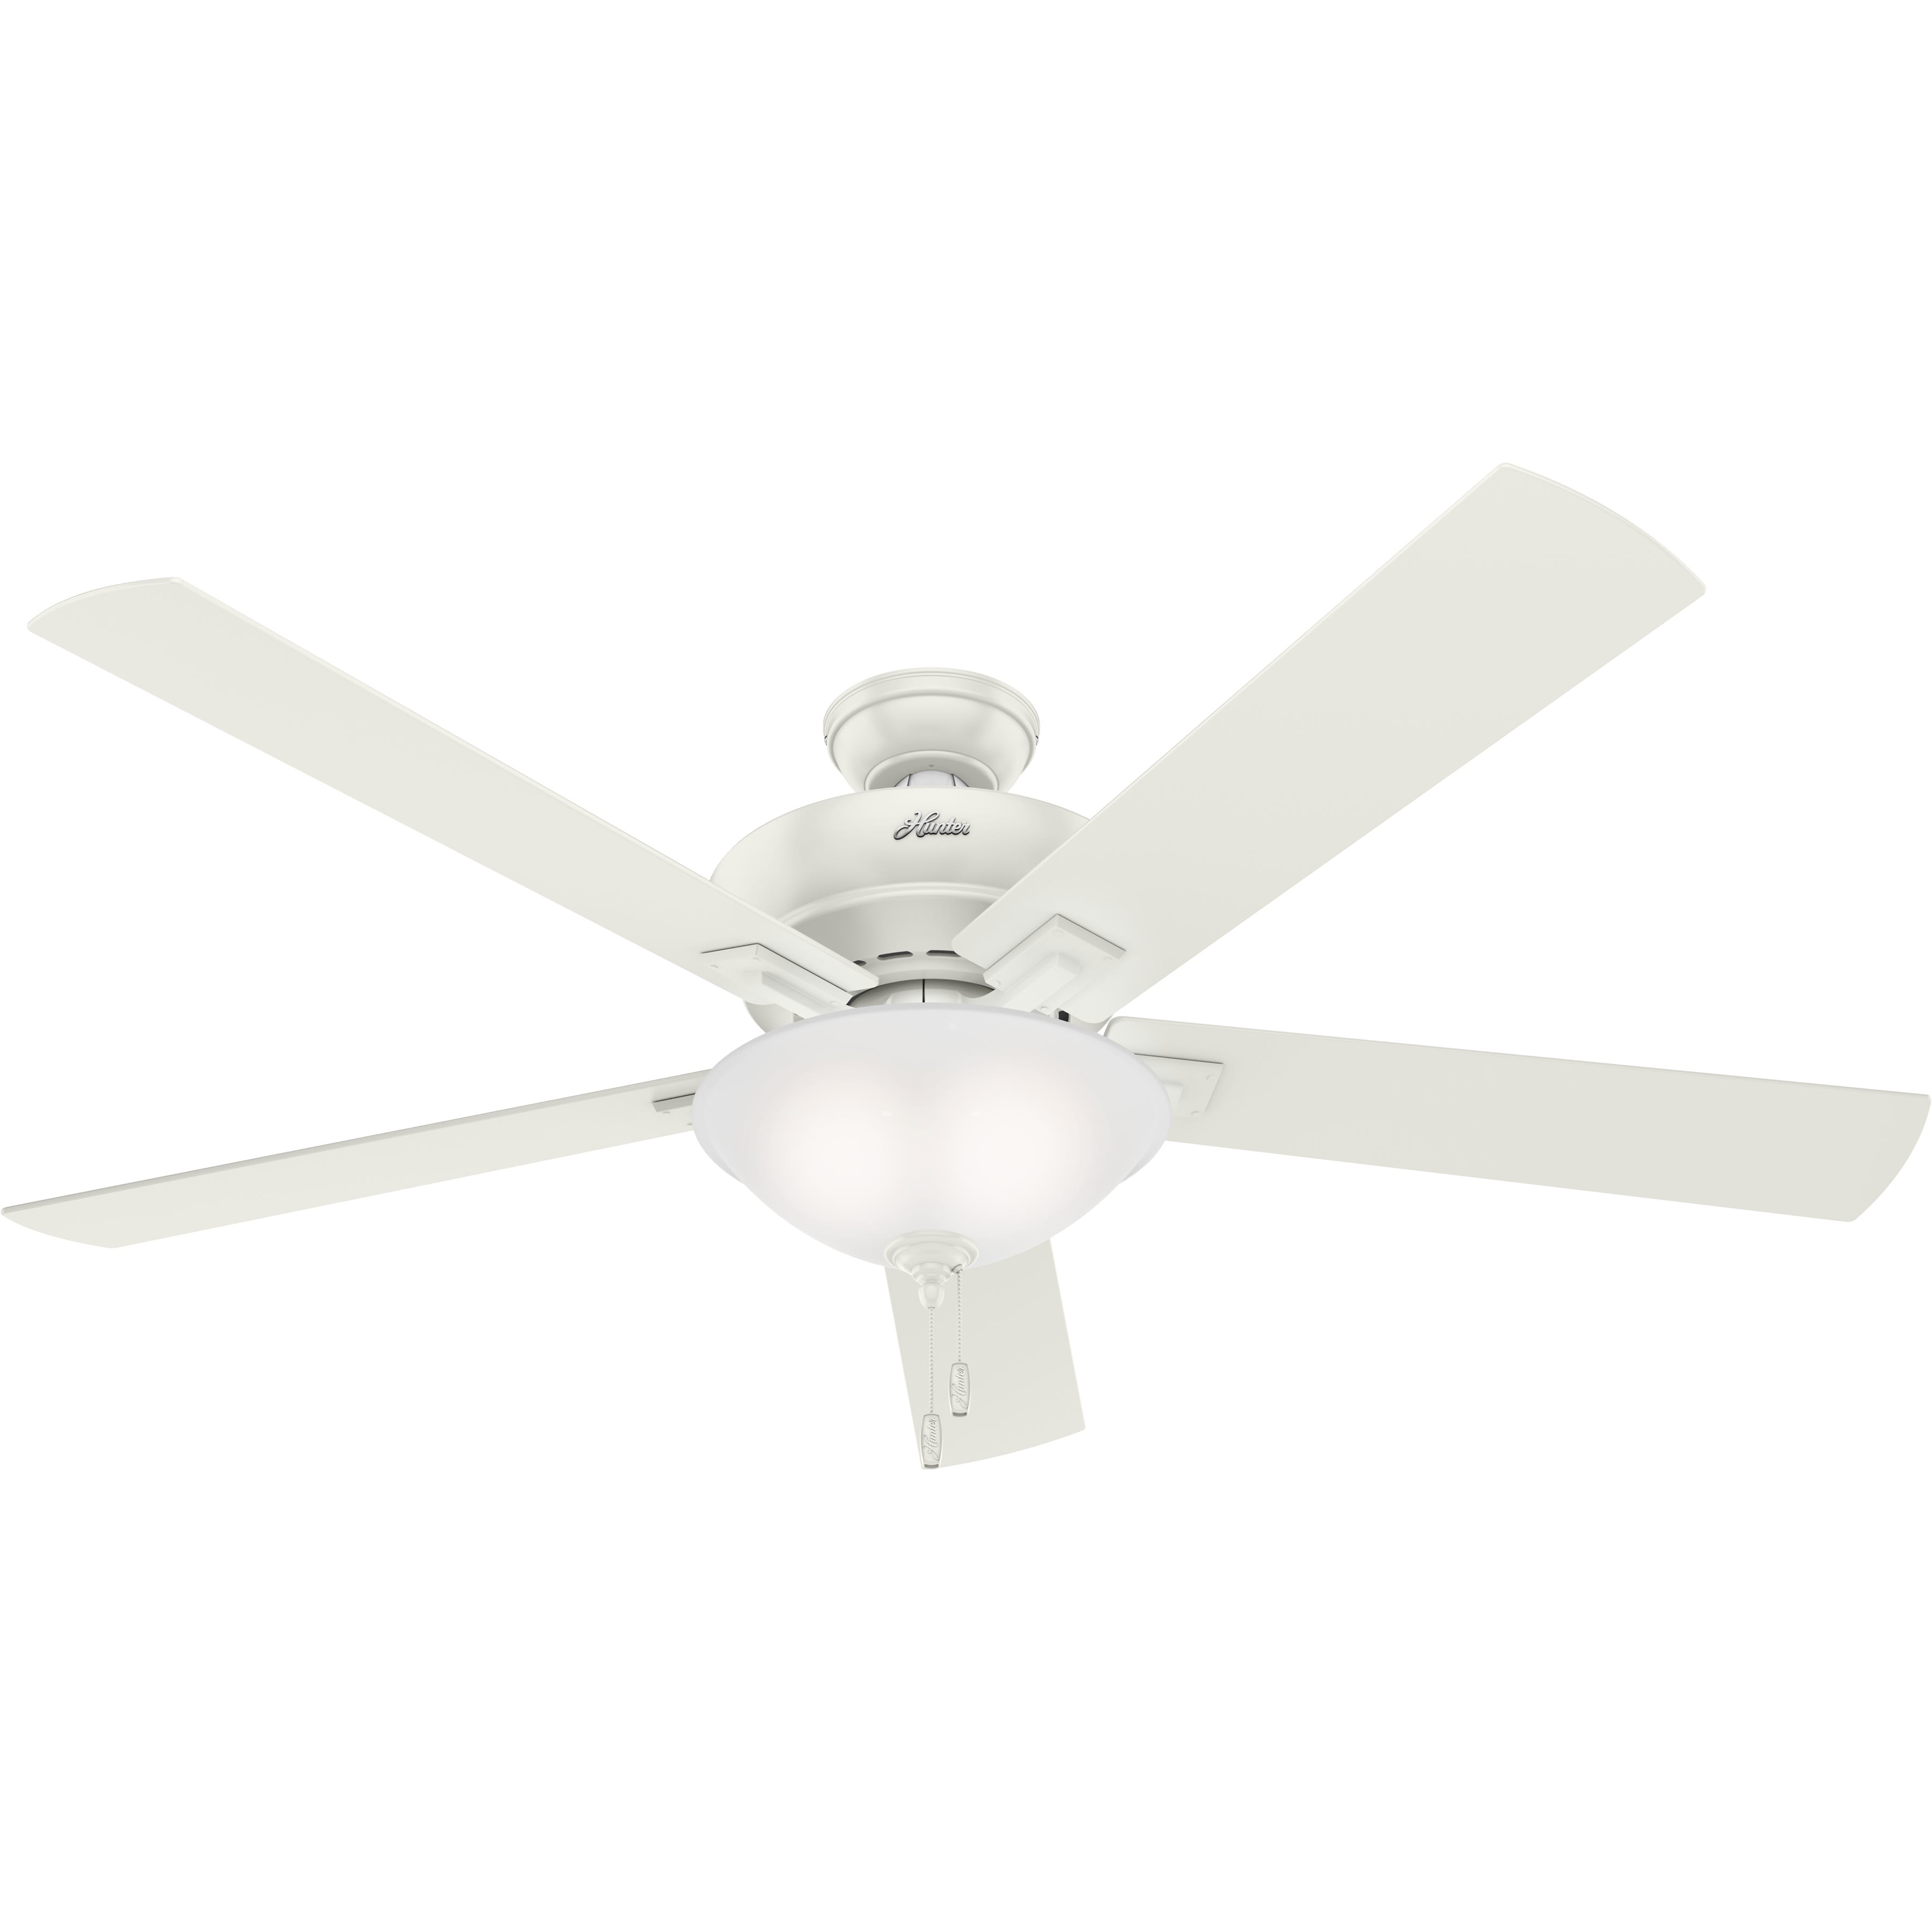 Regalia ceiling fan in fresh white finish